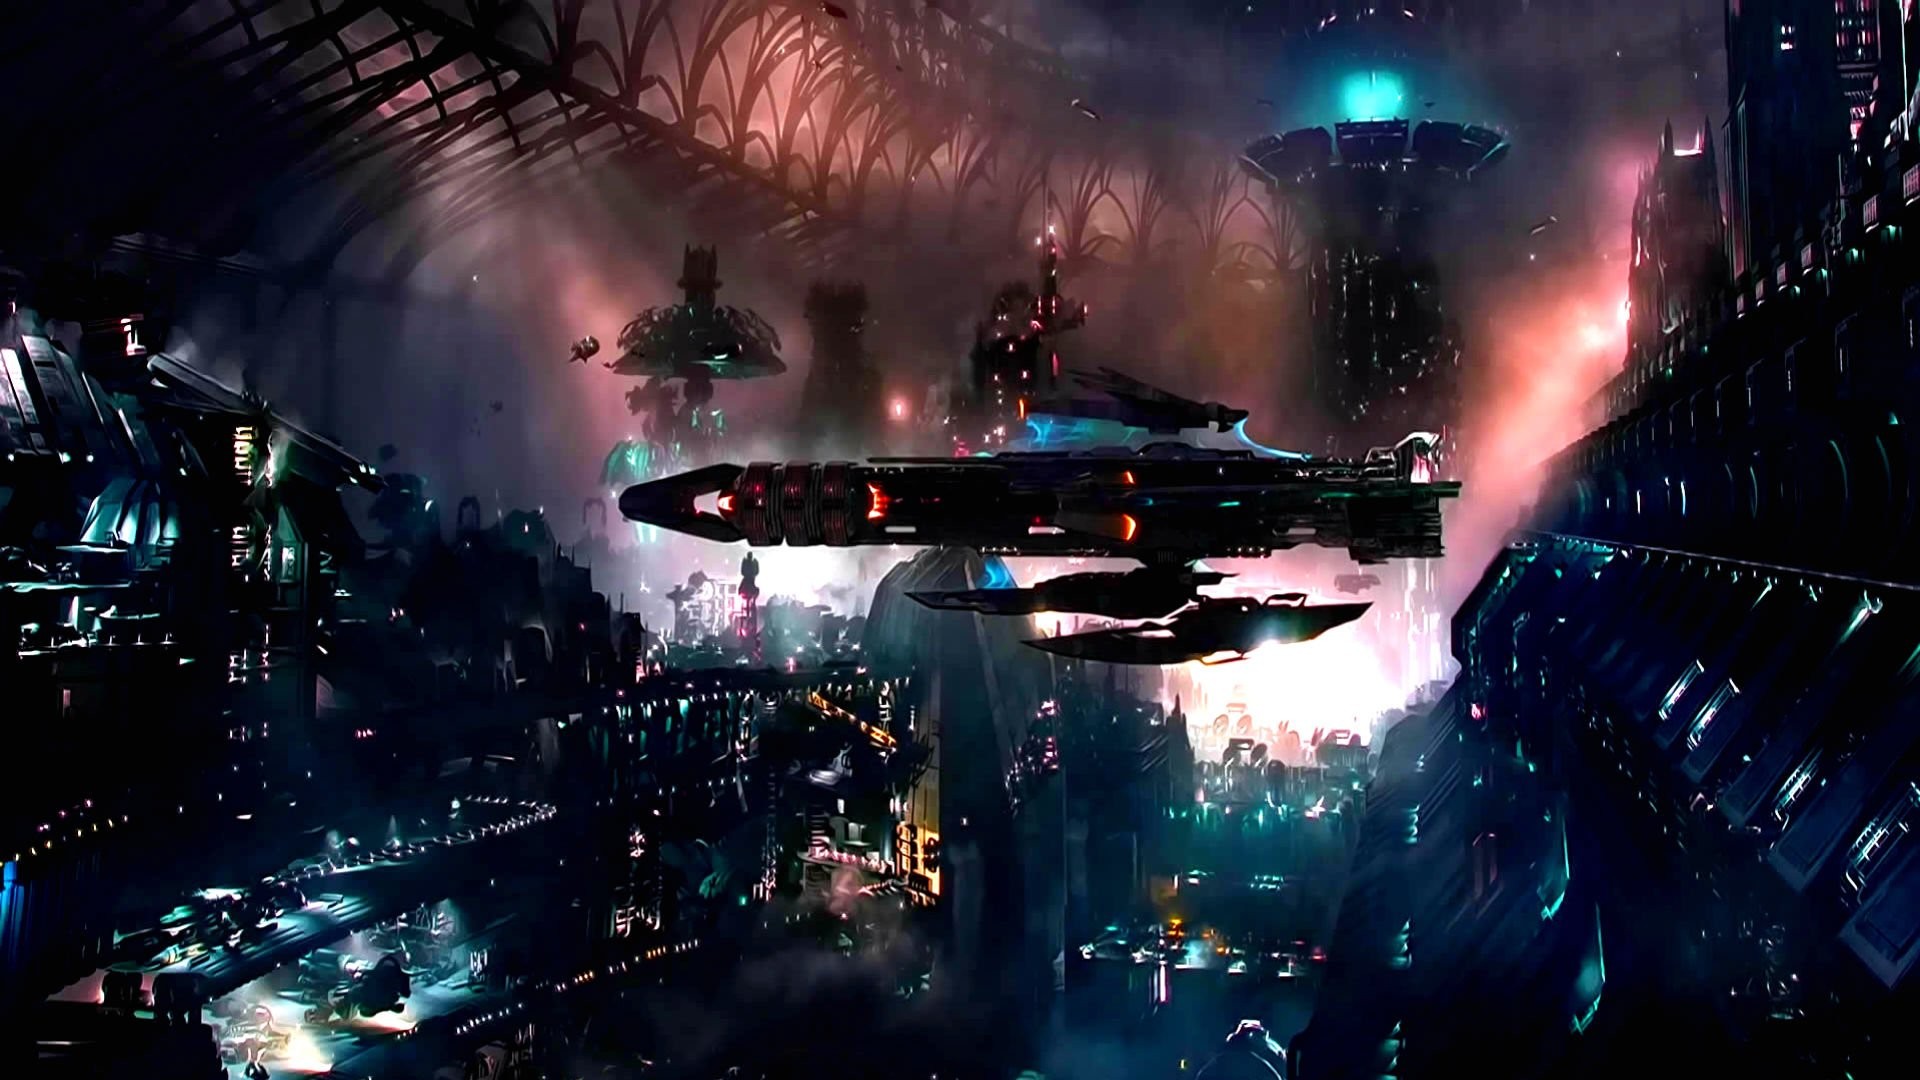 Hd Images Sci Fi Movies - HD Wallpaper 